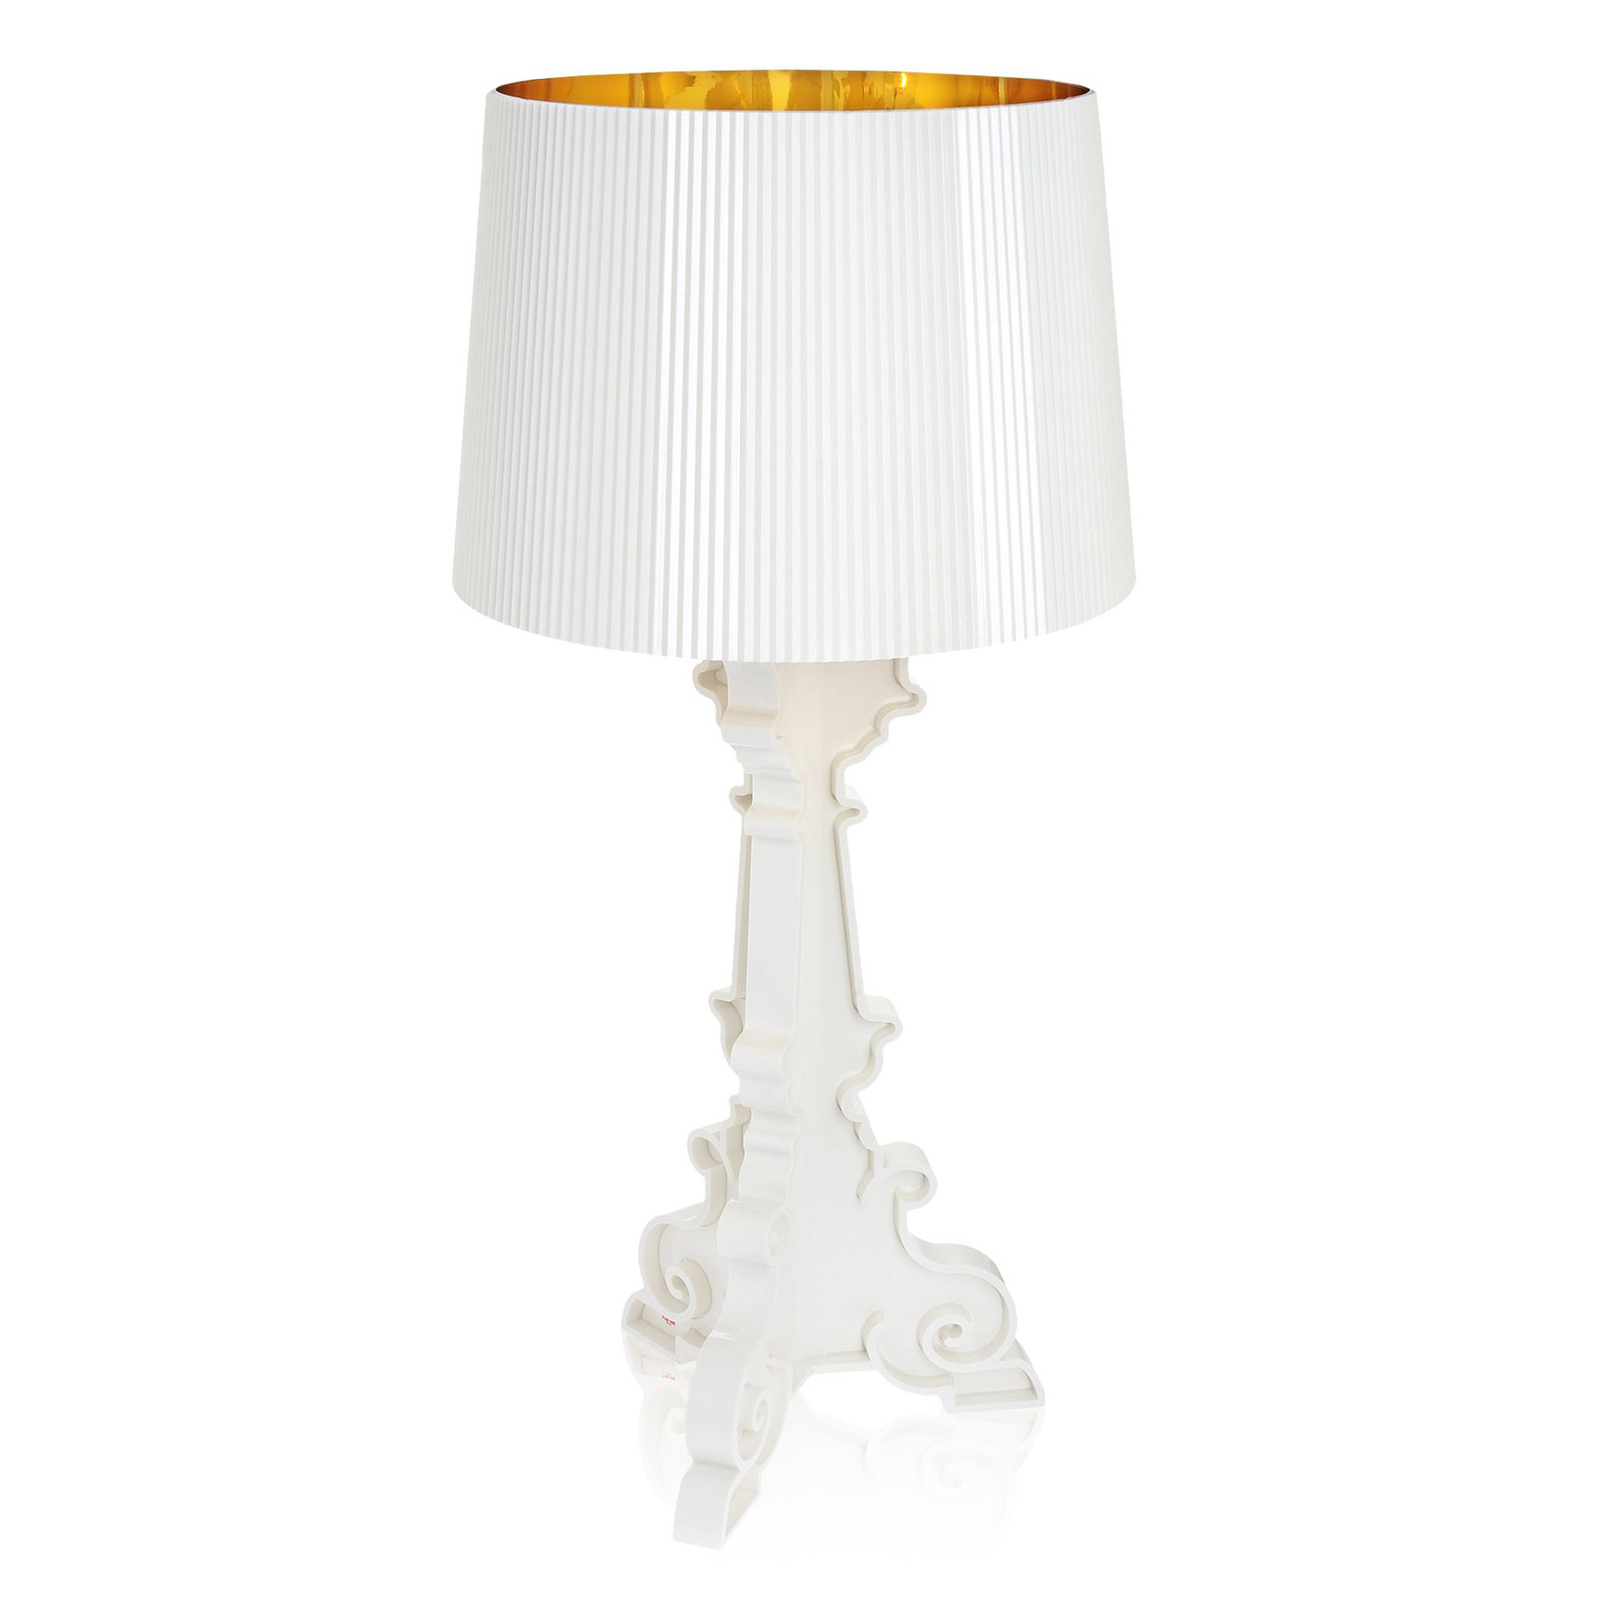 Kartell Bourgie lampe à poser LED E14, blanc/doré